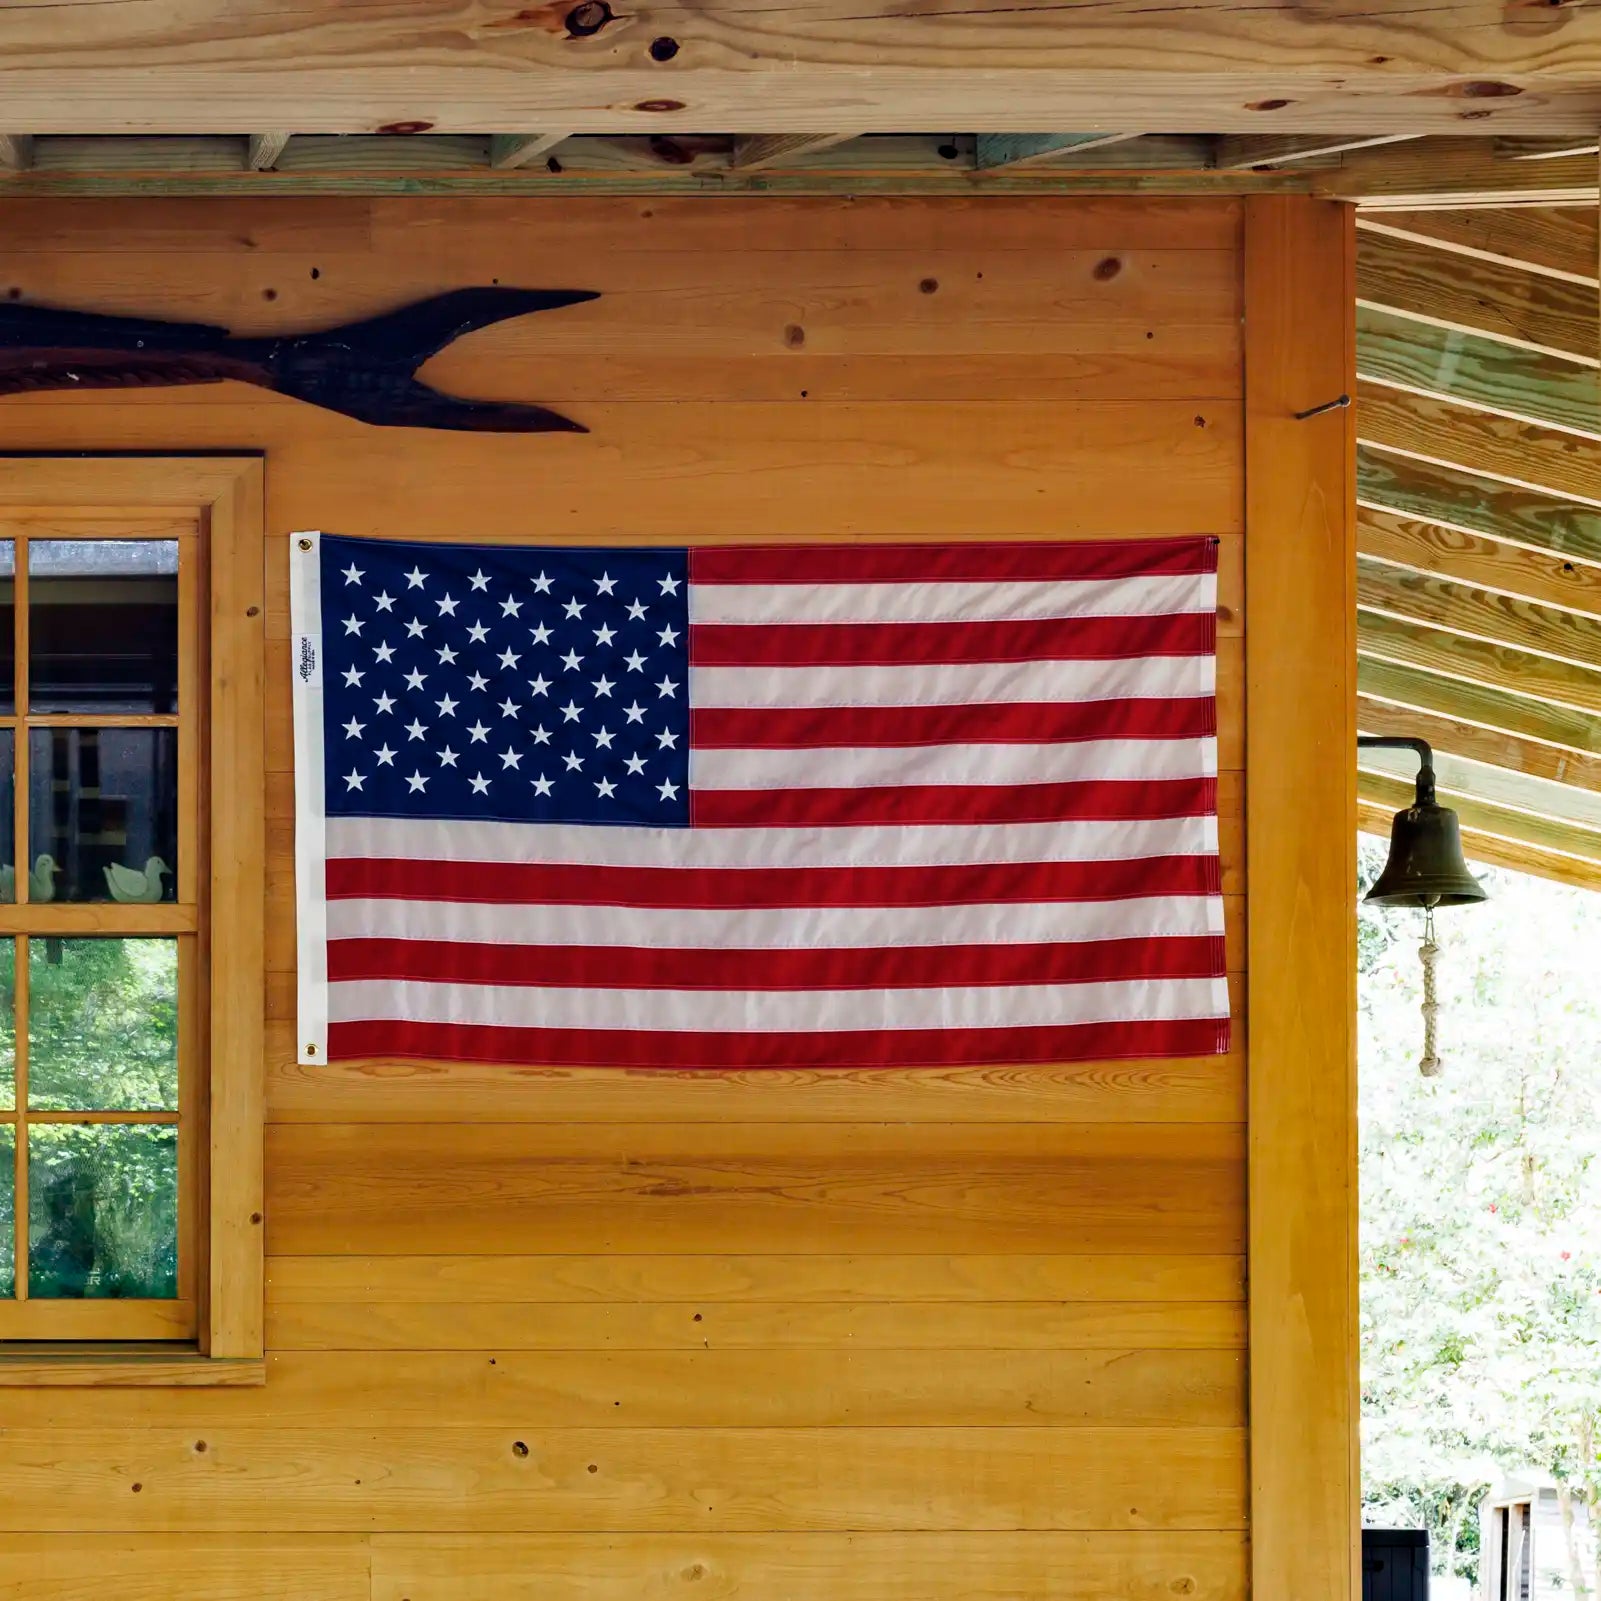 3' x 5' American Flag on Wall